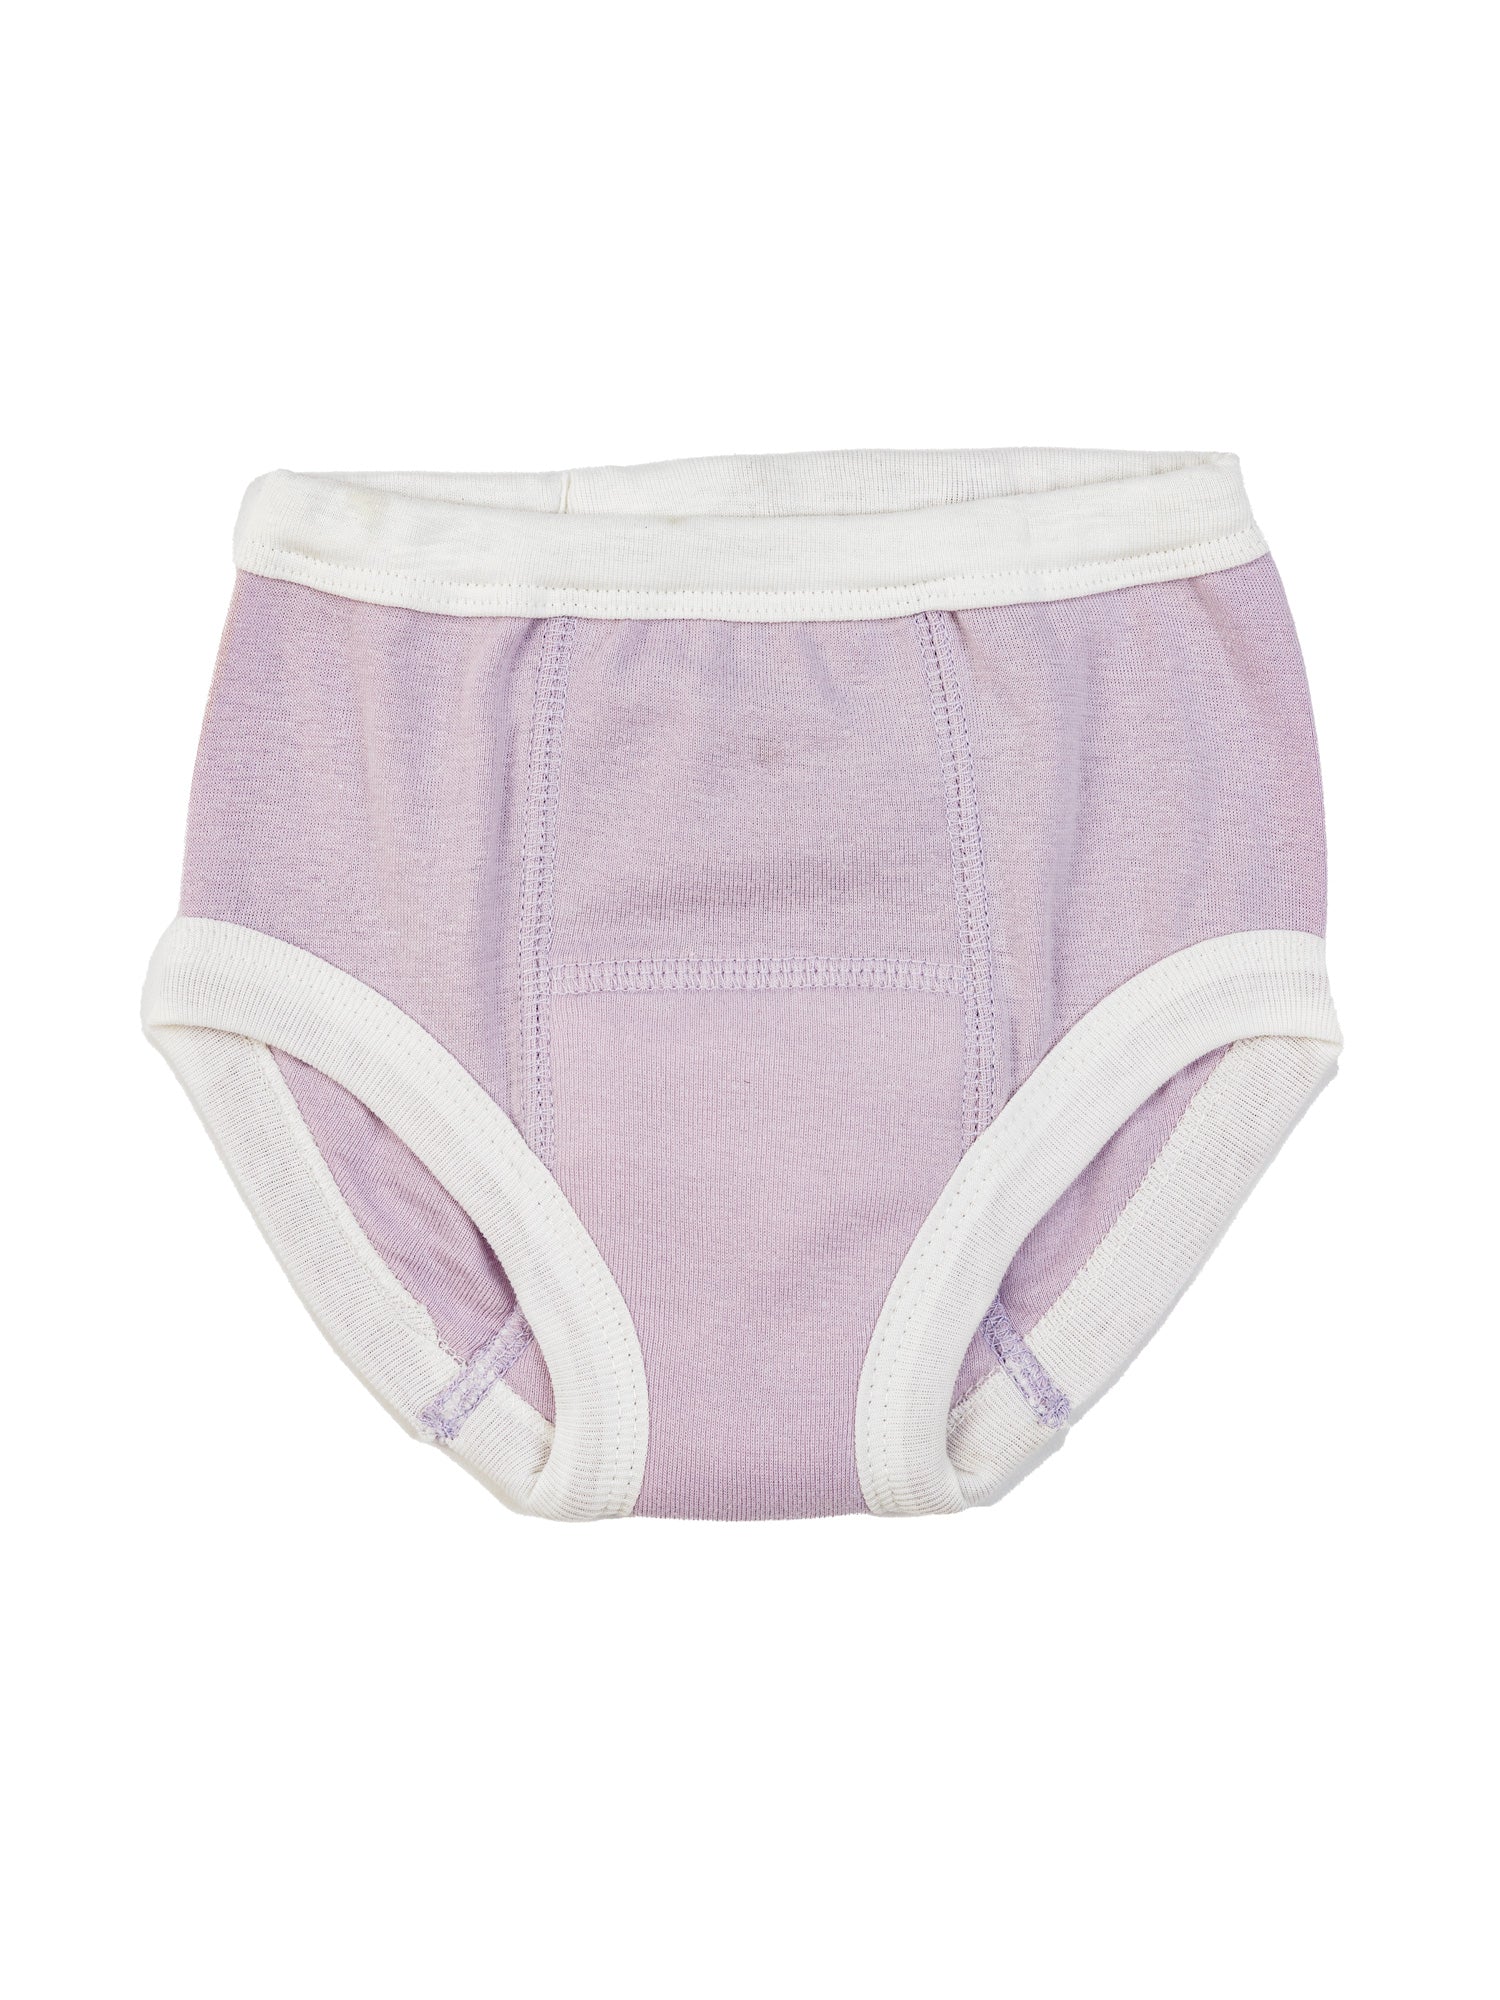 Girls' Potty Training Pants, 4T-5T, 17 units – Pull-Ups : Training pants